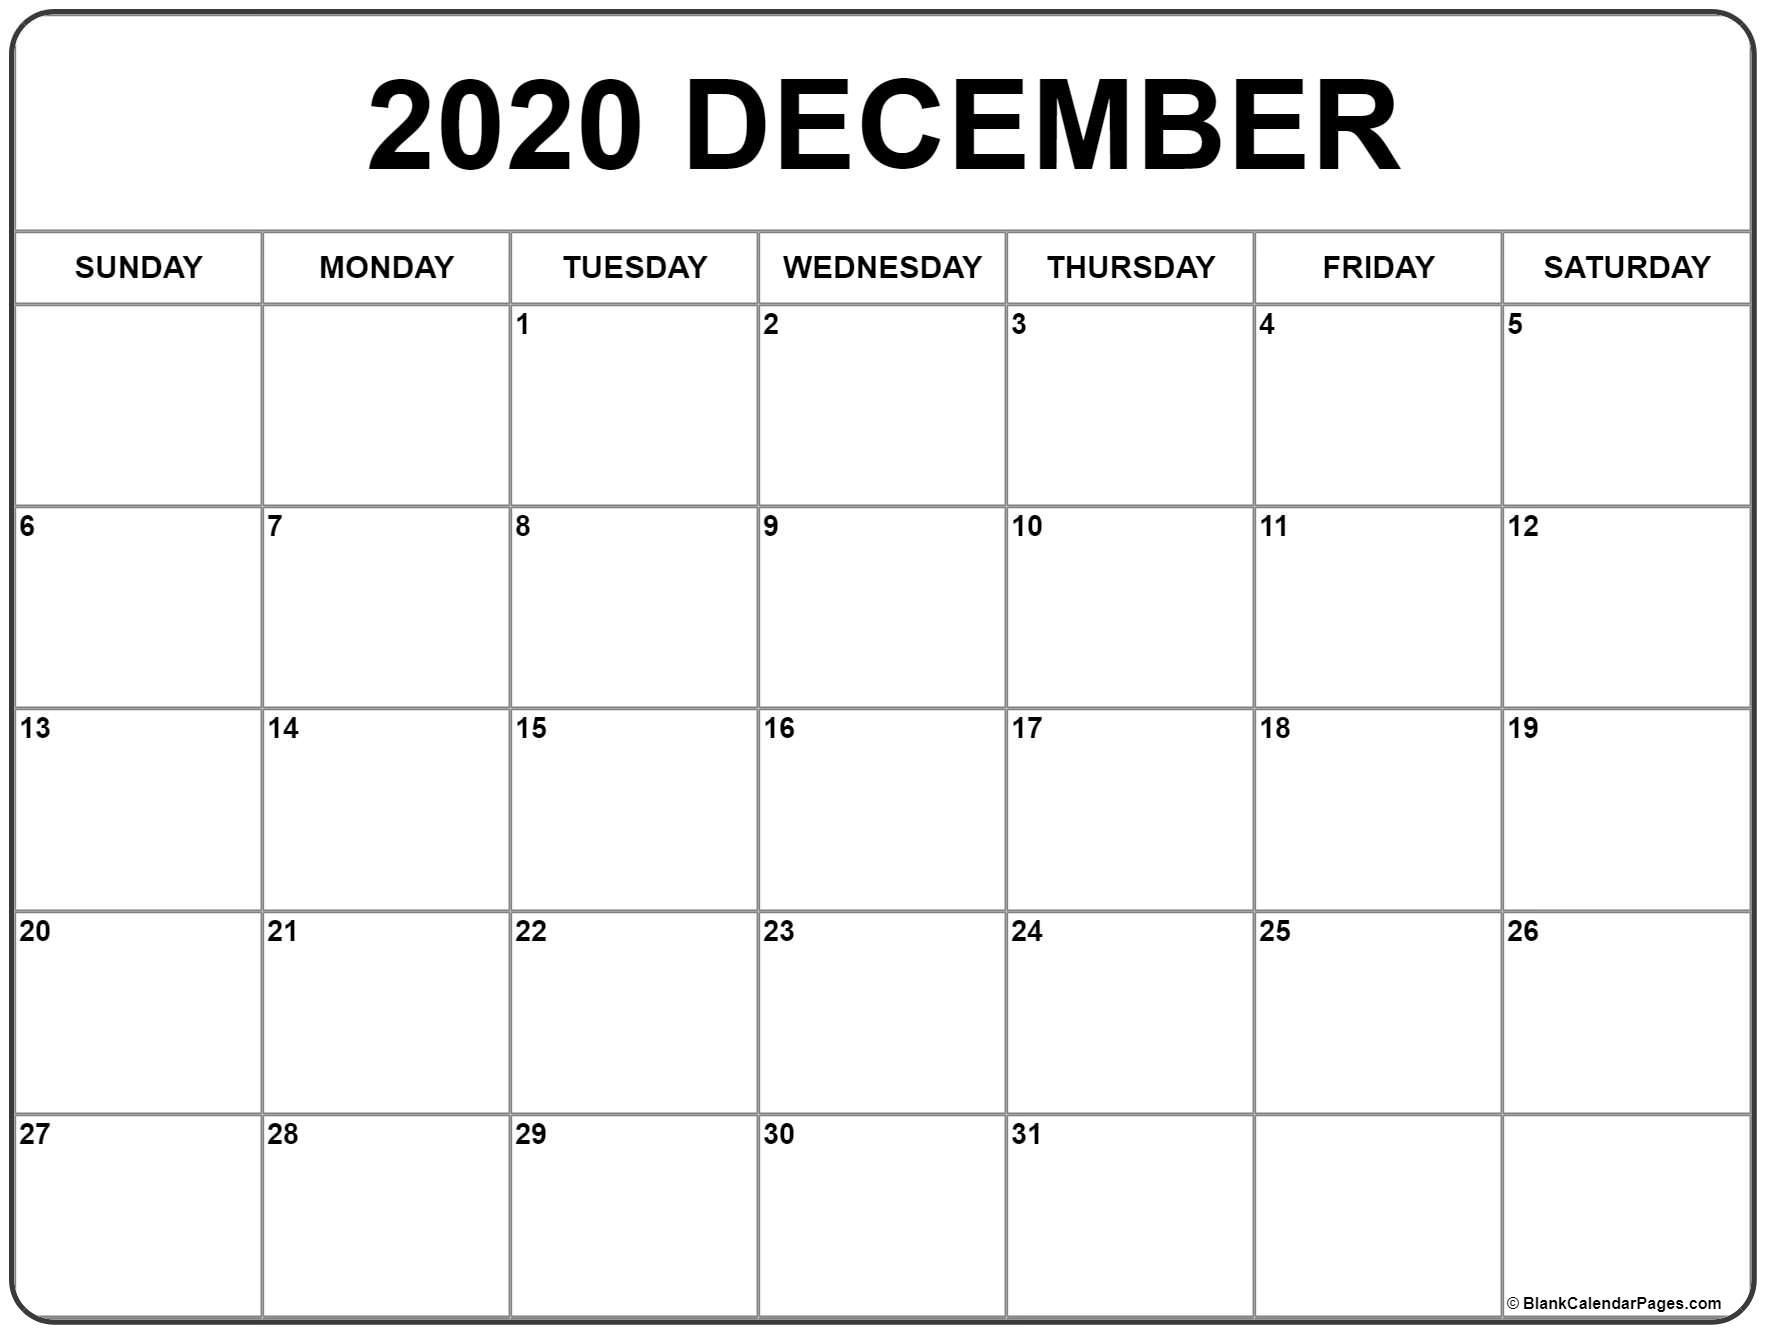 December 2020 Printable Calendar Template #2020Calendars Monthly Monday To Sunday Calendars 2020 Printable Free Blank